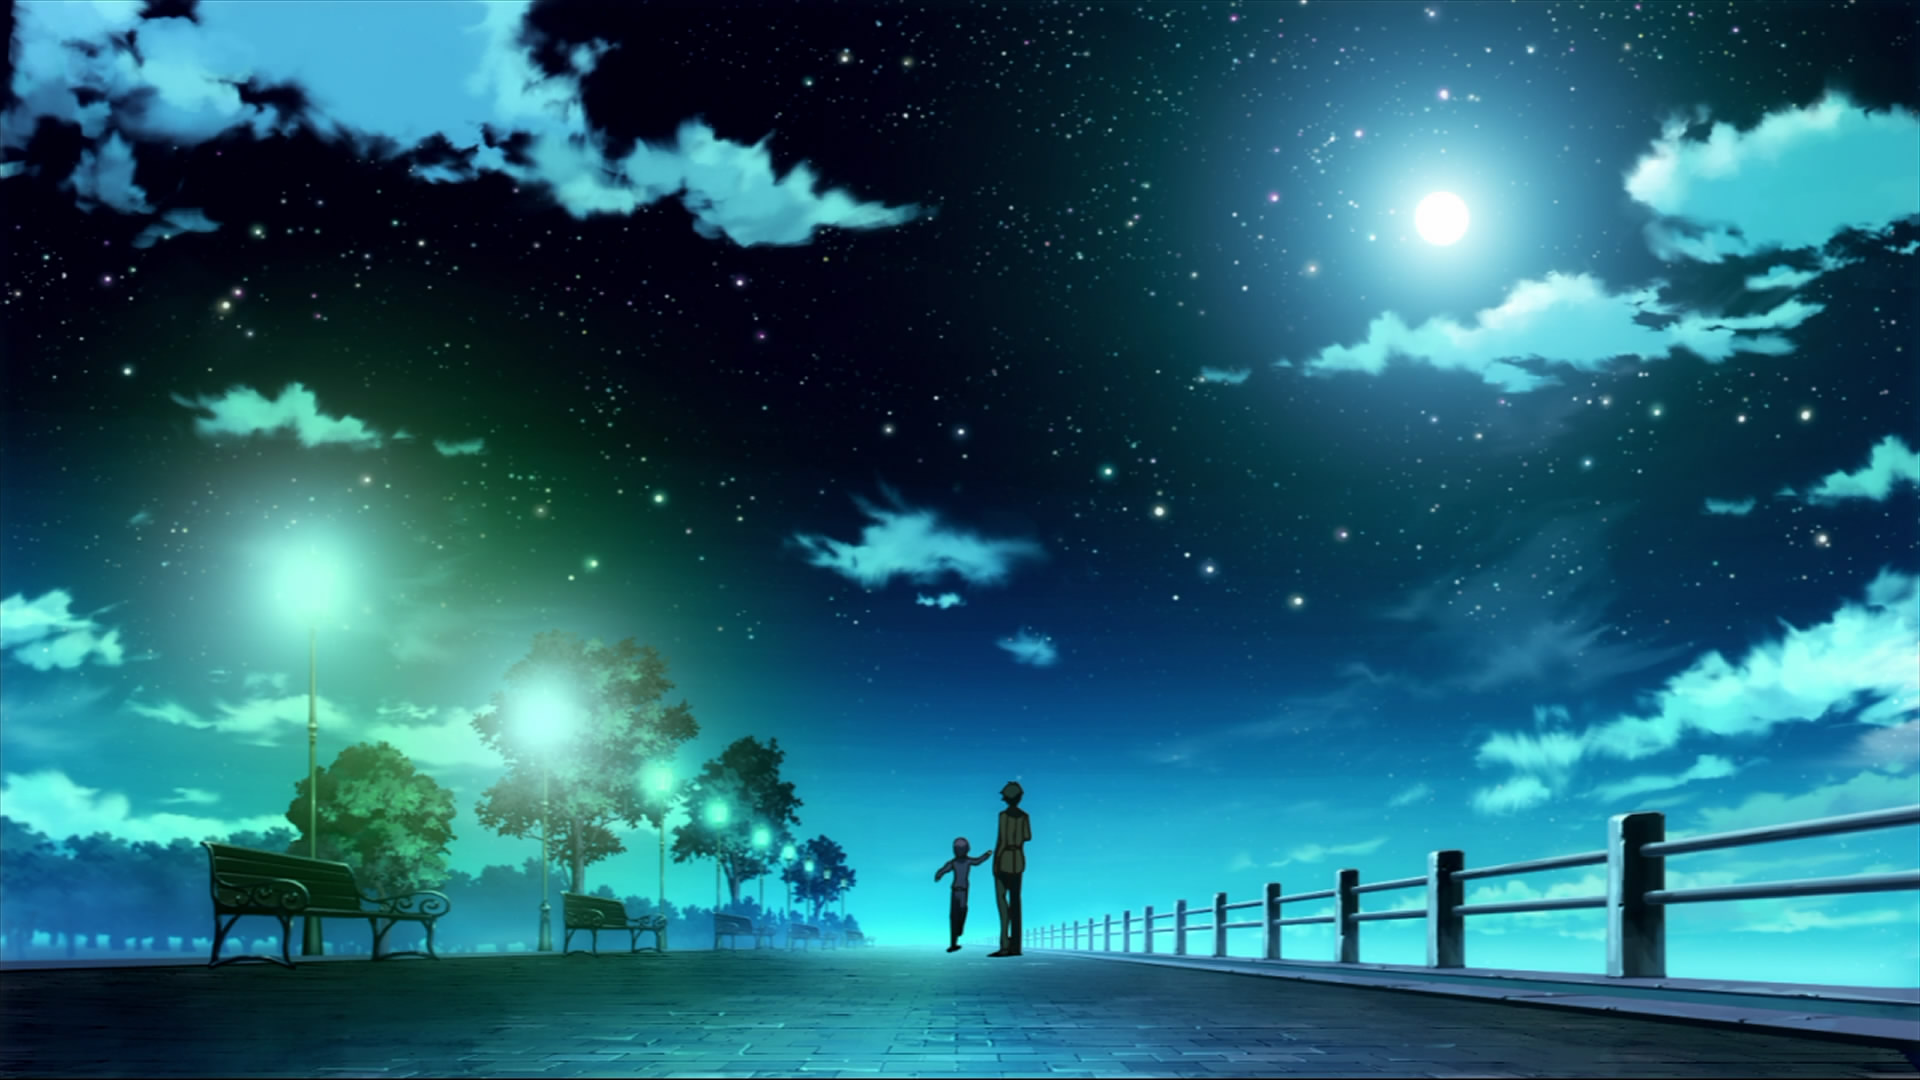 night, skyscapes - desktop wallpaper